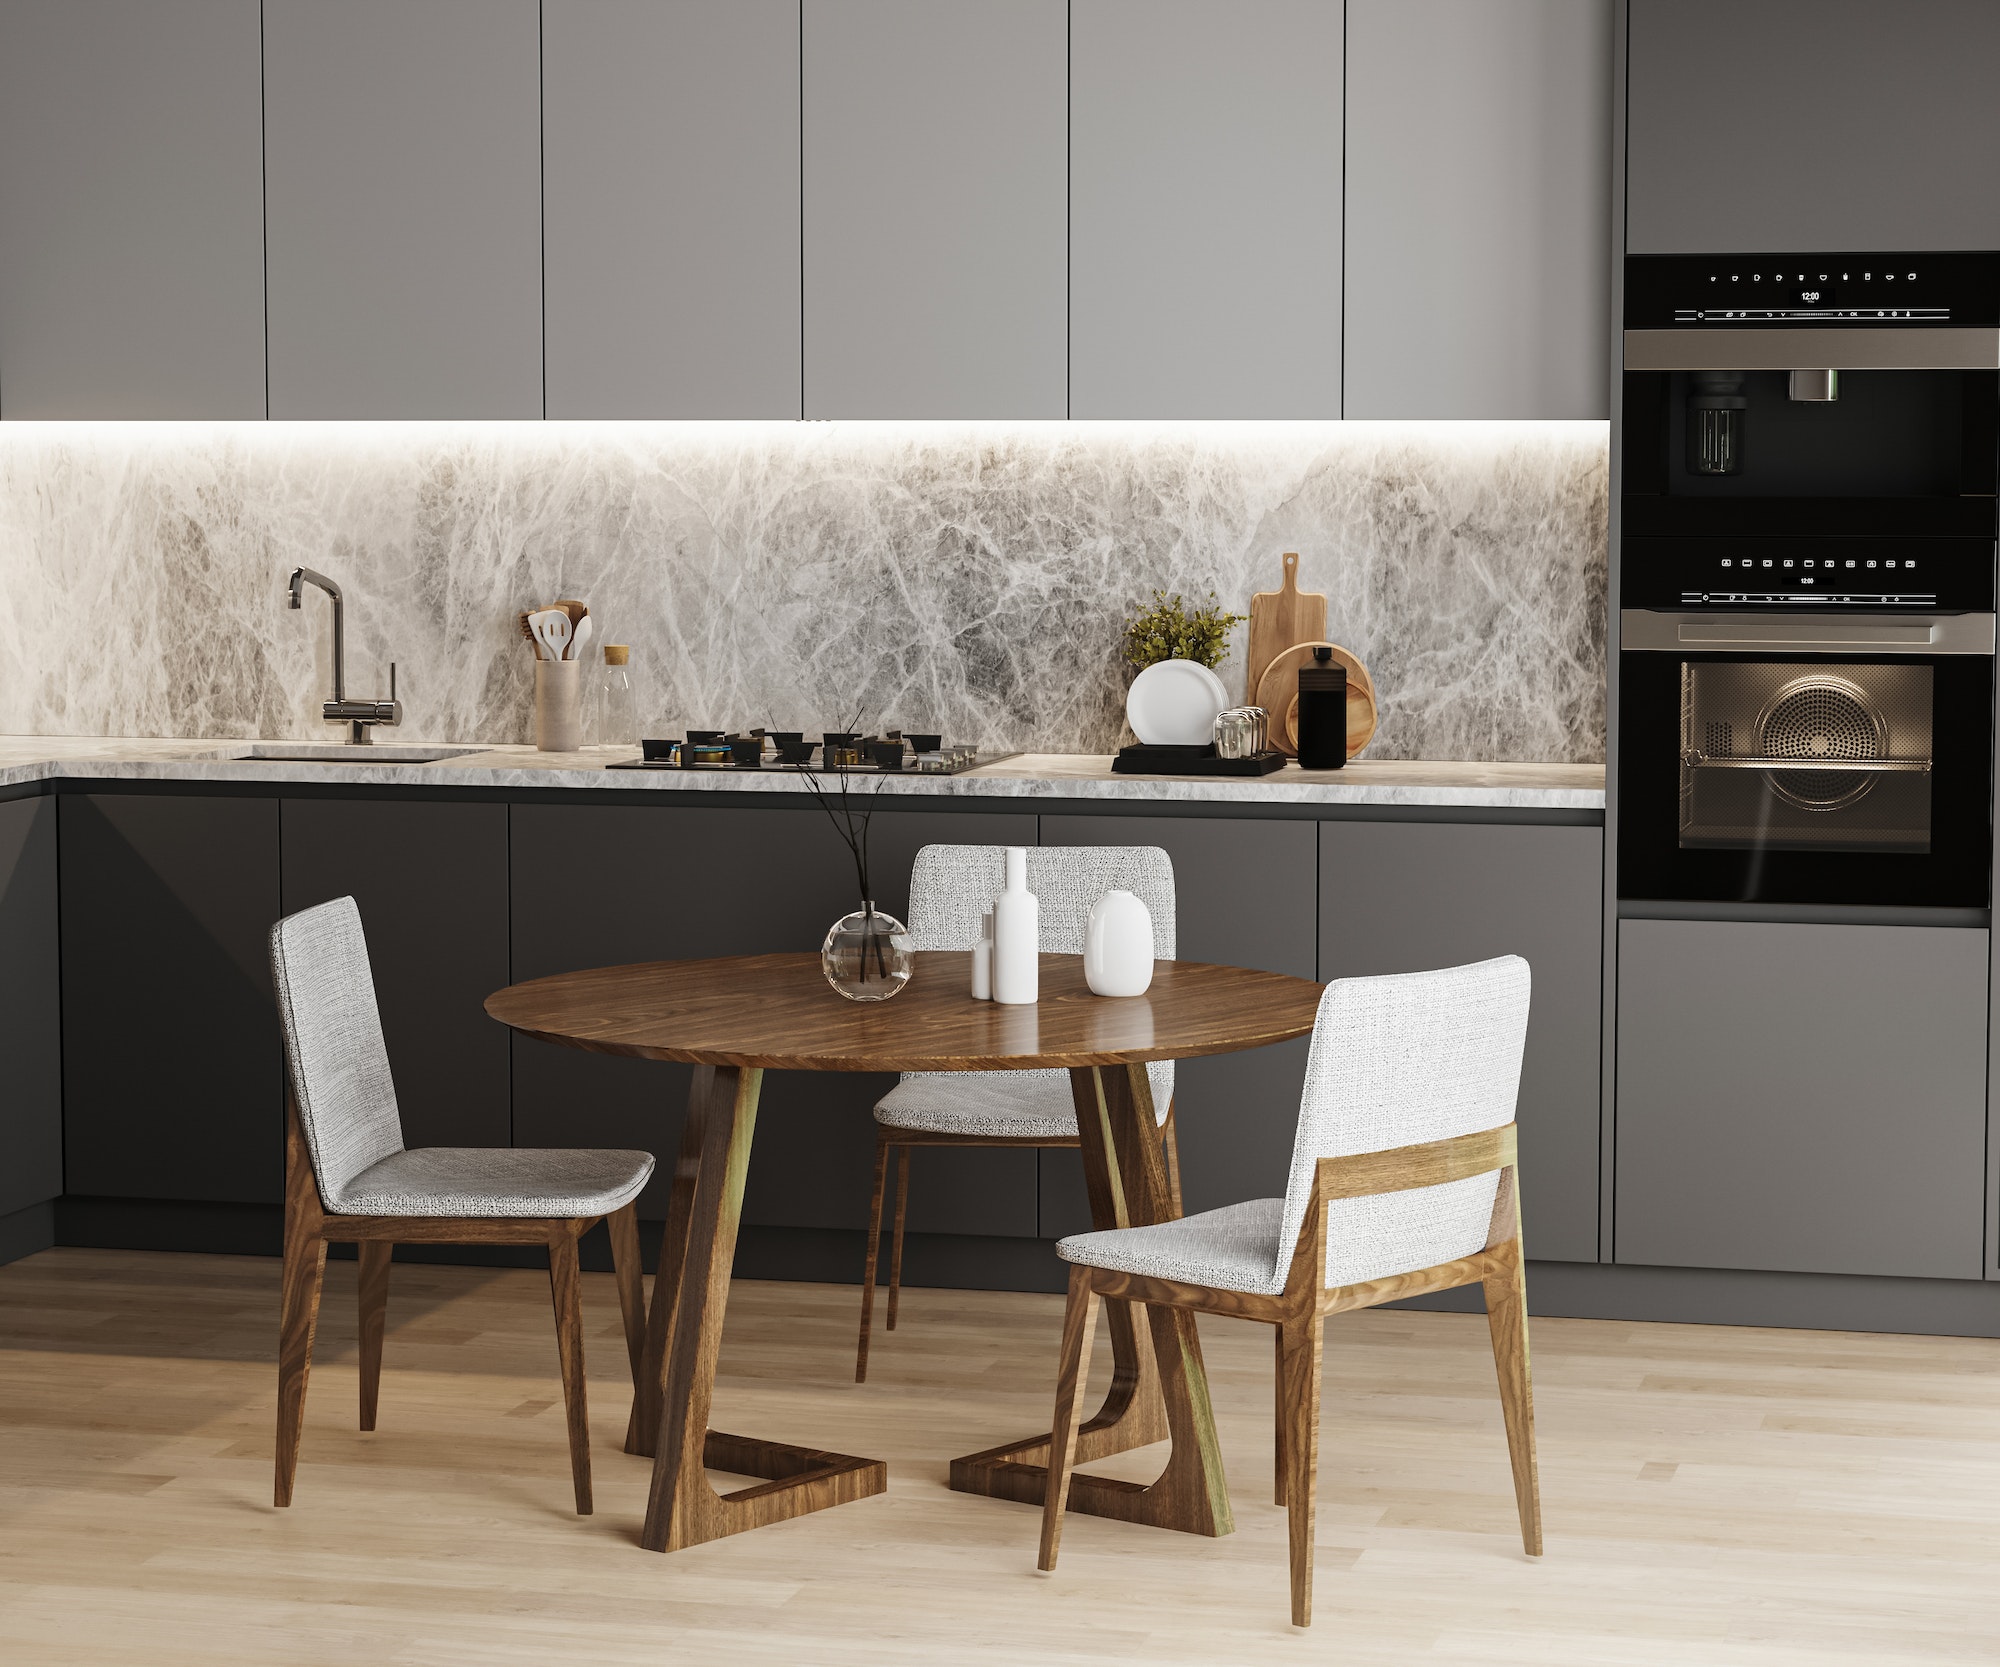 modern kitchen interior with table, kitchen utensils and furniture, kitchen appliances, 3d rendering